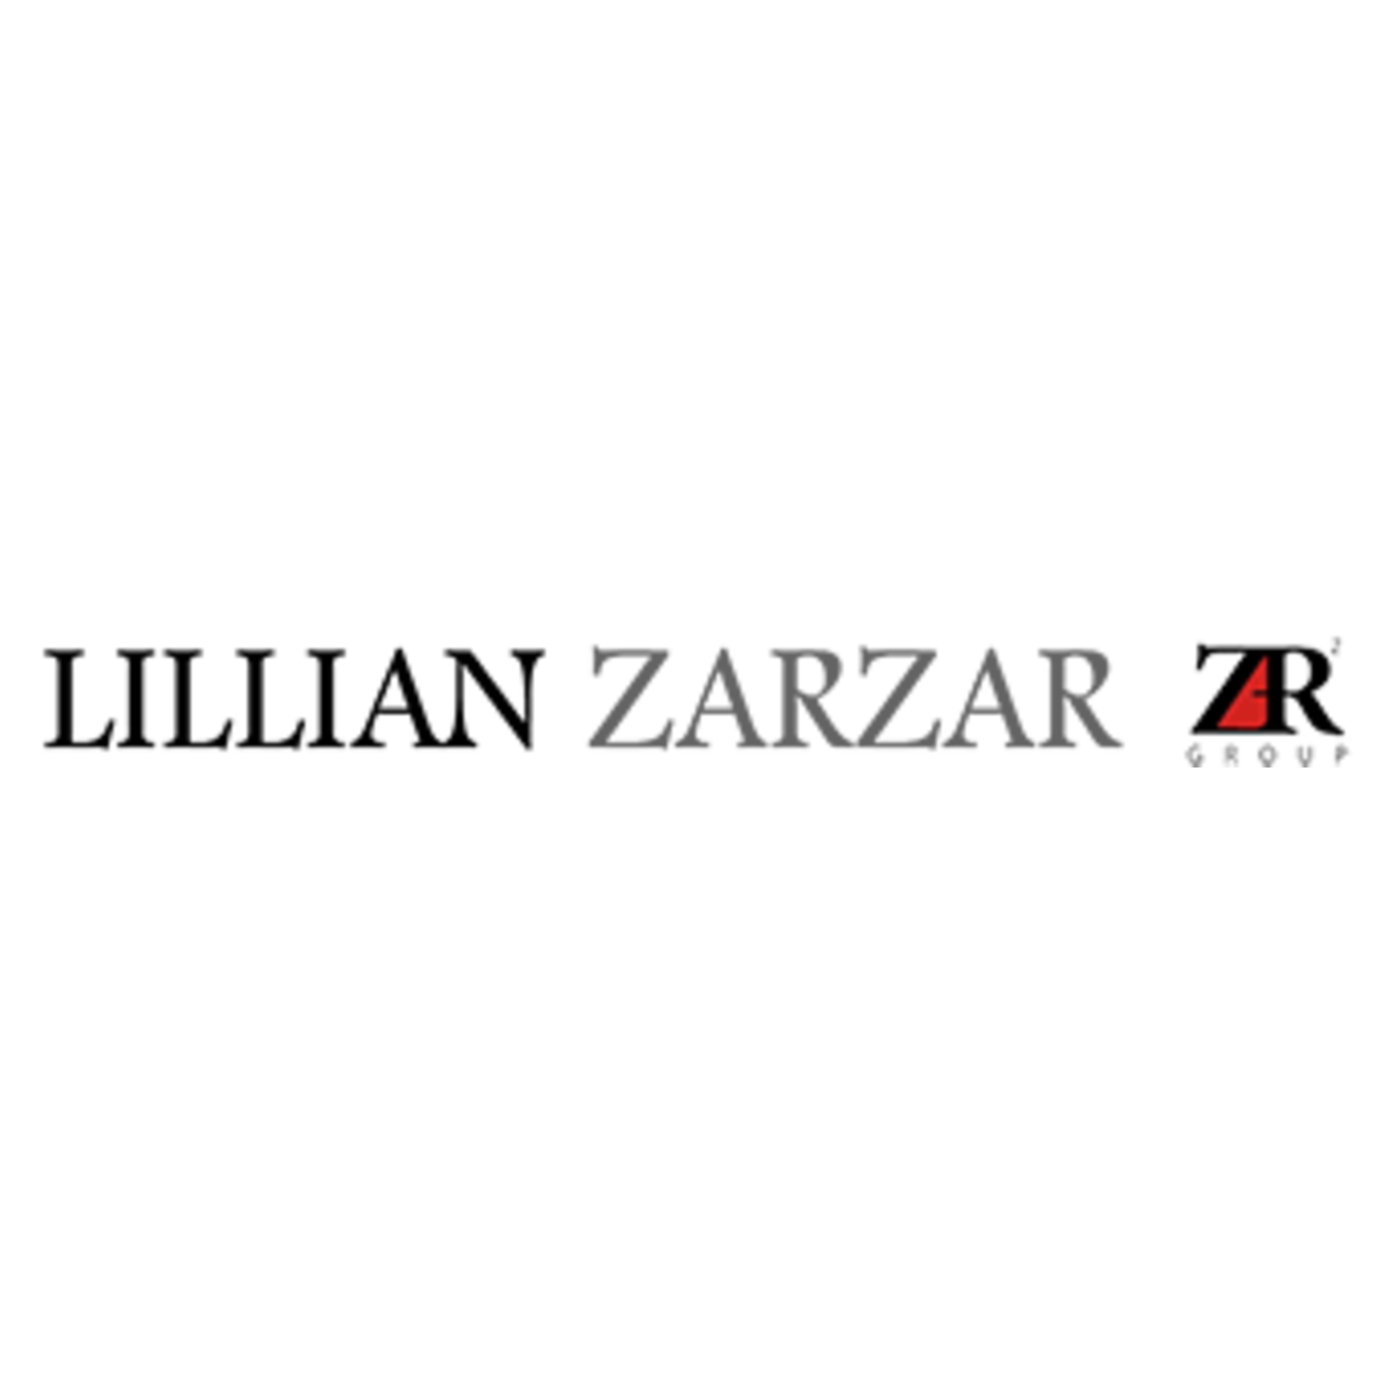 Lillian Zarzar from The Zarzar Group